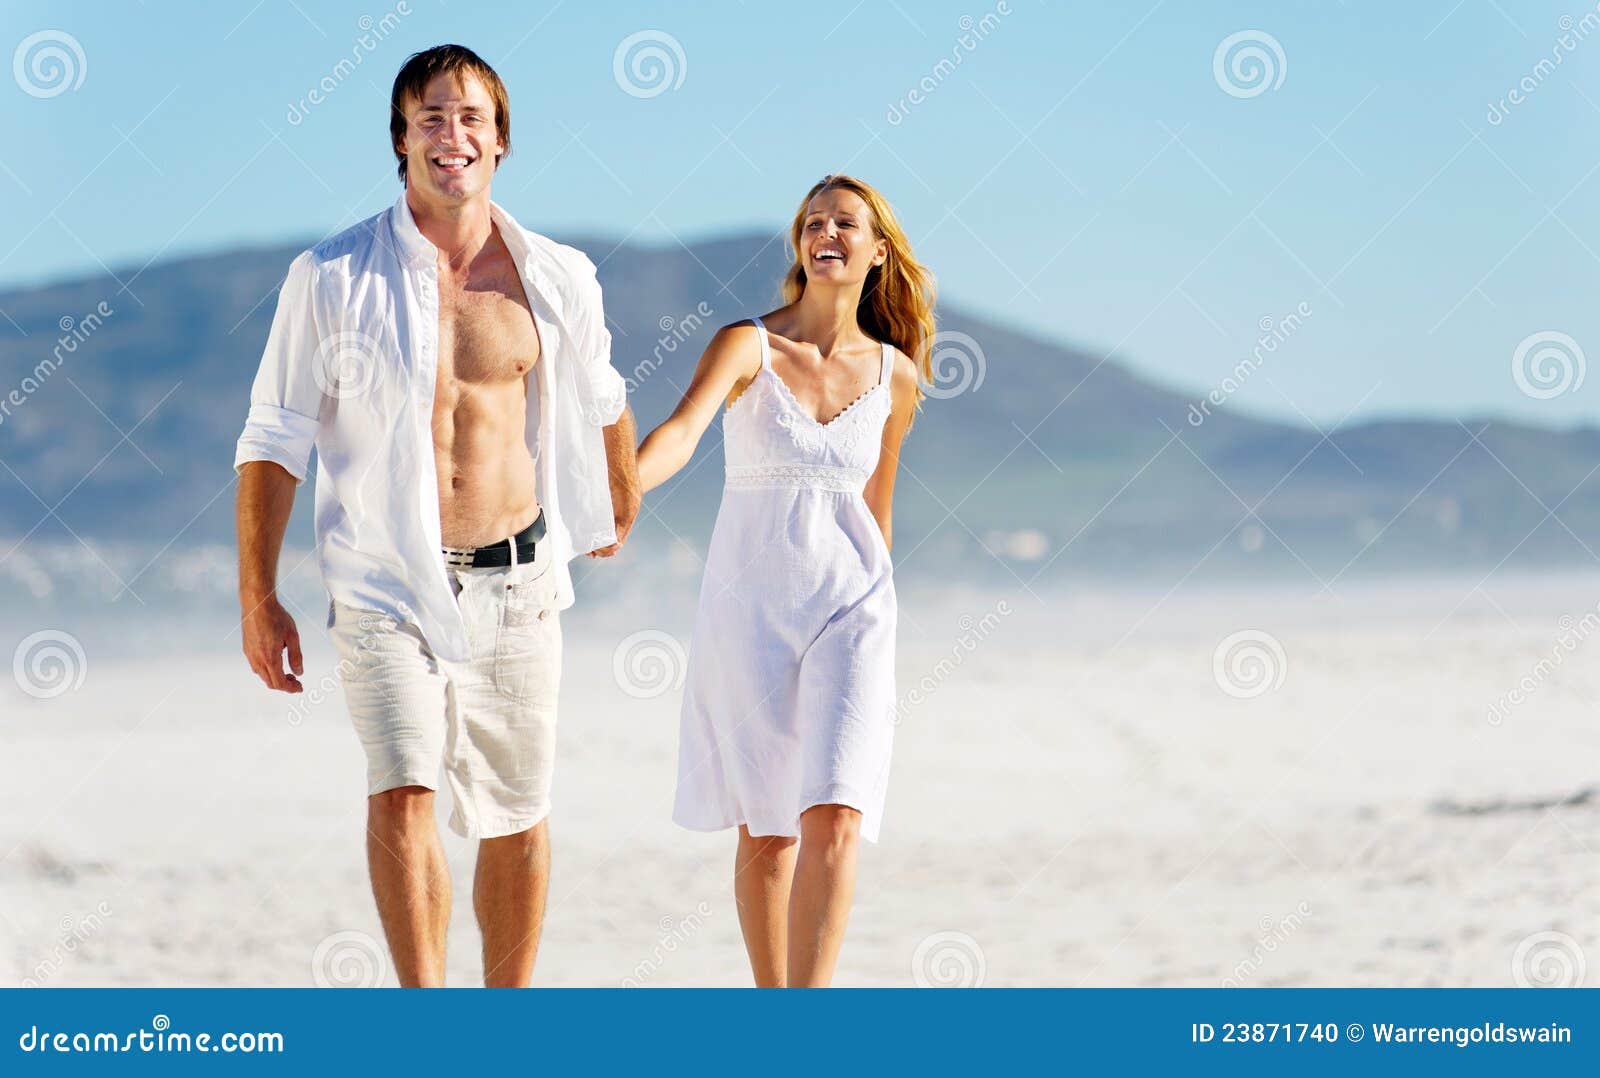 carefree walking beach couple